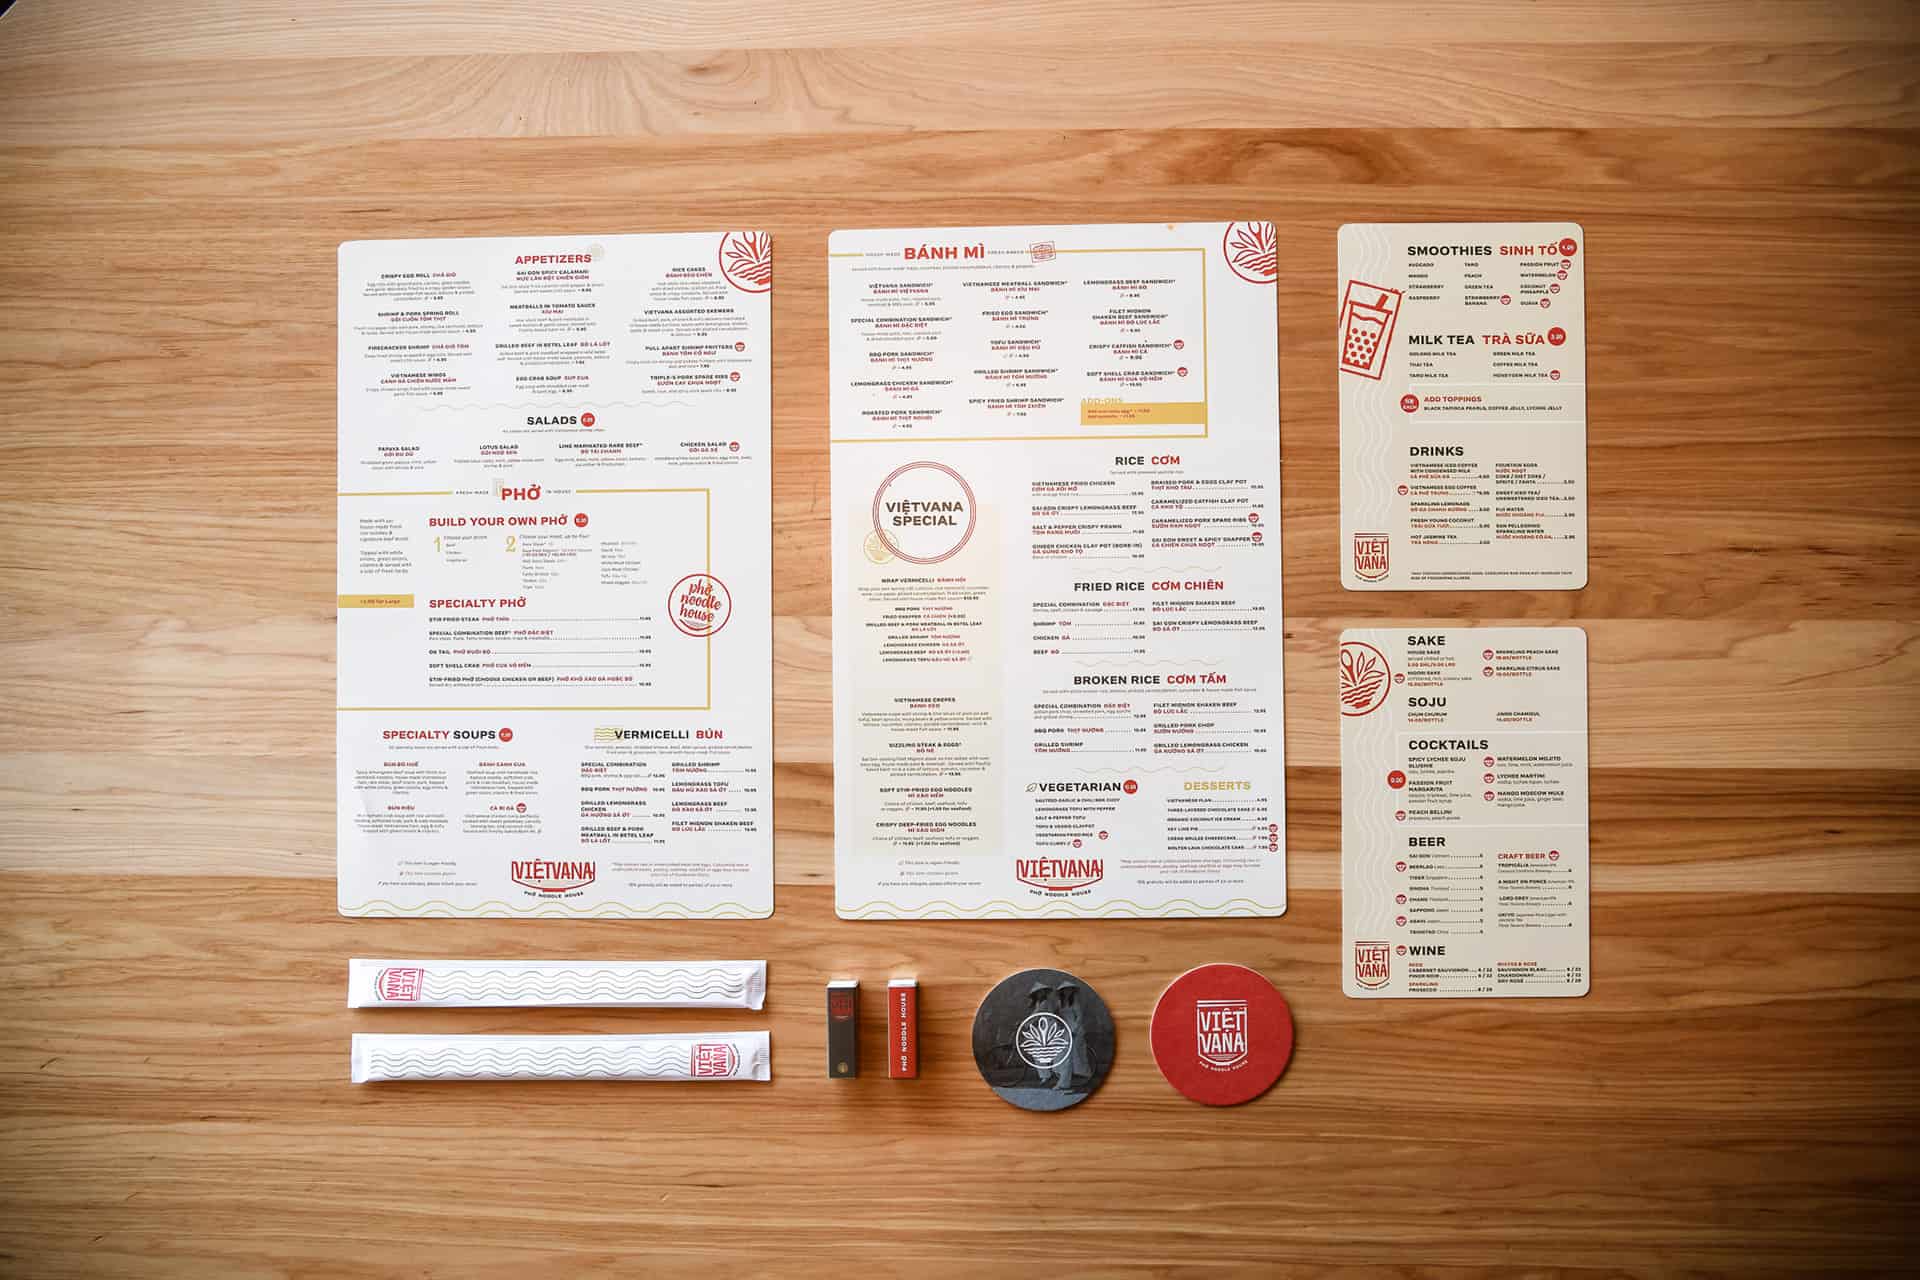 Vietvana - Vietnamese full service restaurant branding - menu systems design